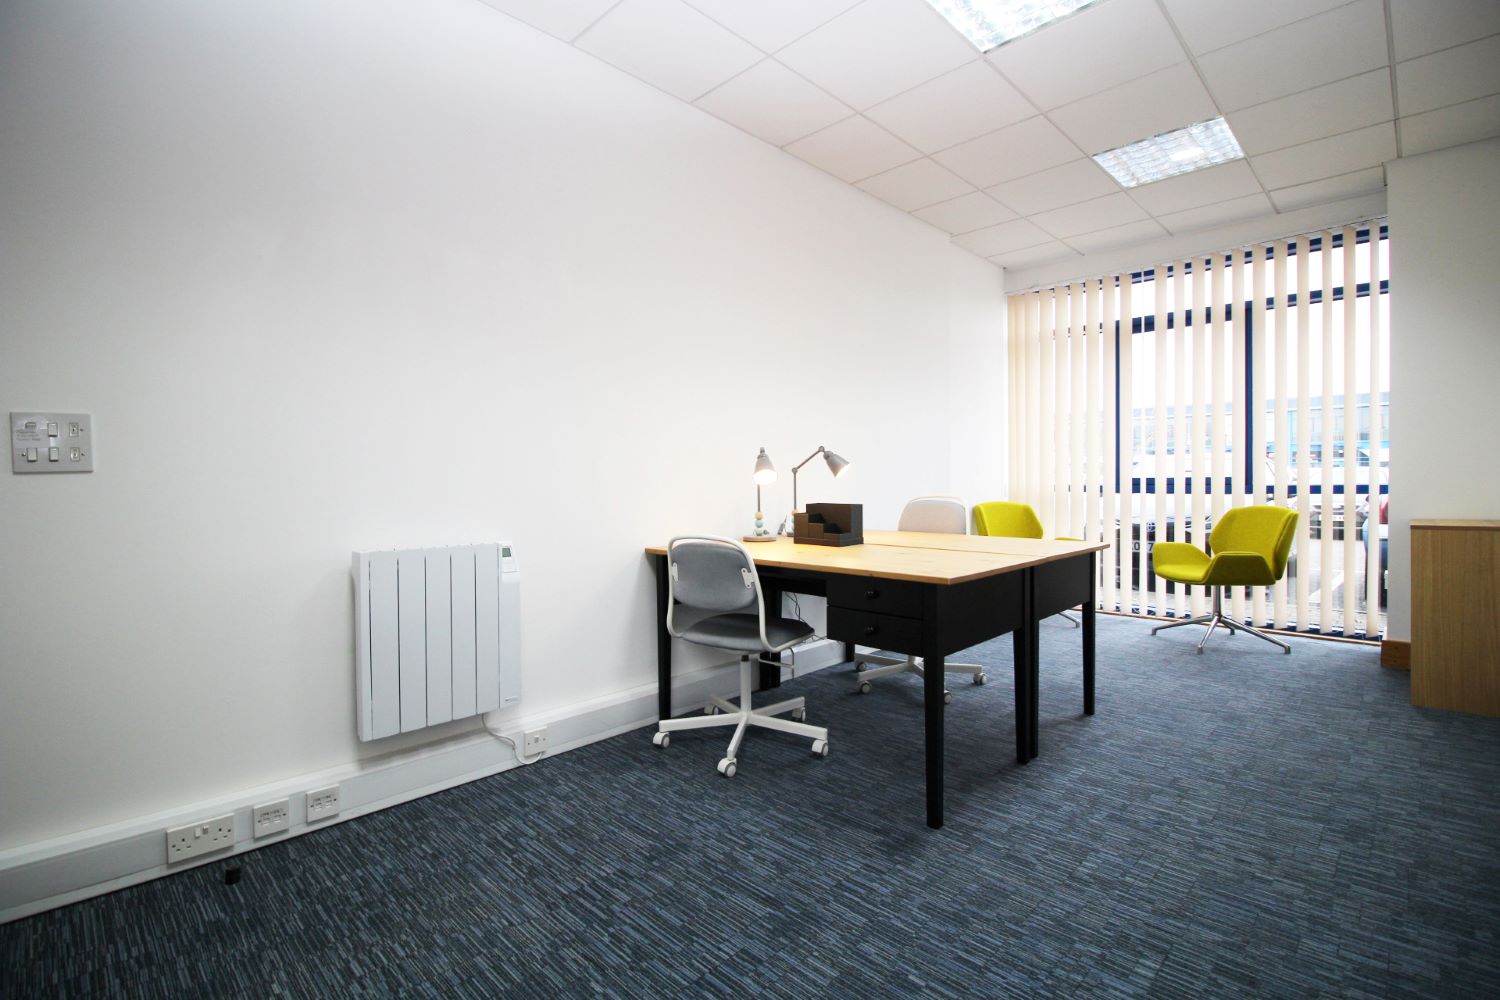 Serviced office space in Aylesbury,Buckinghamshire